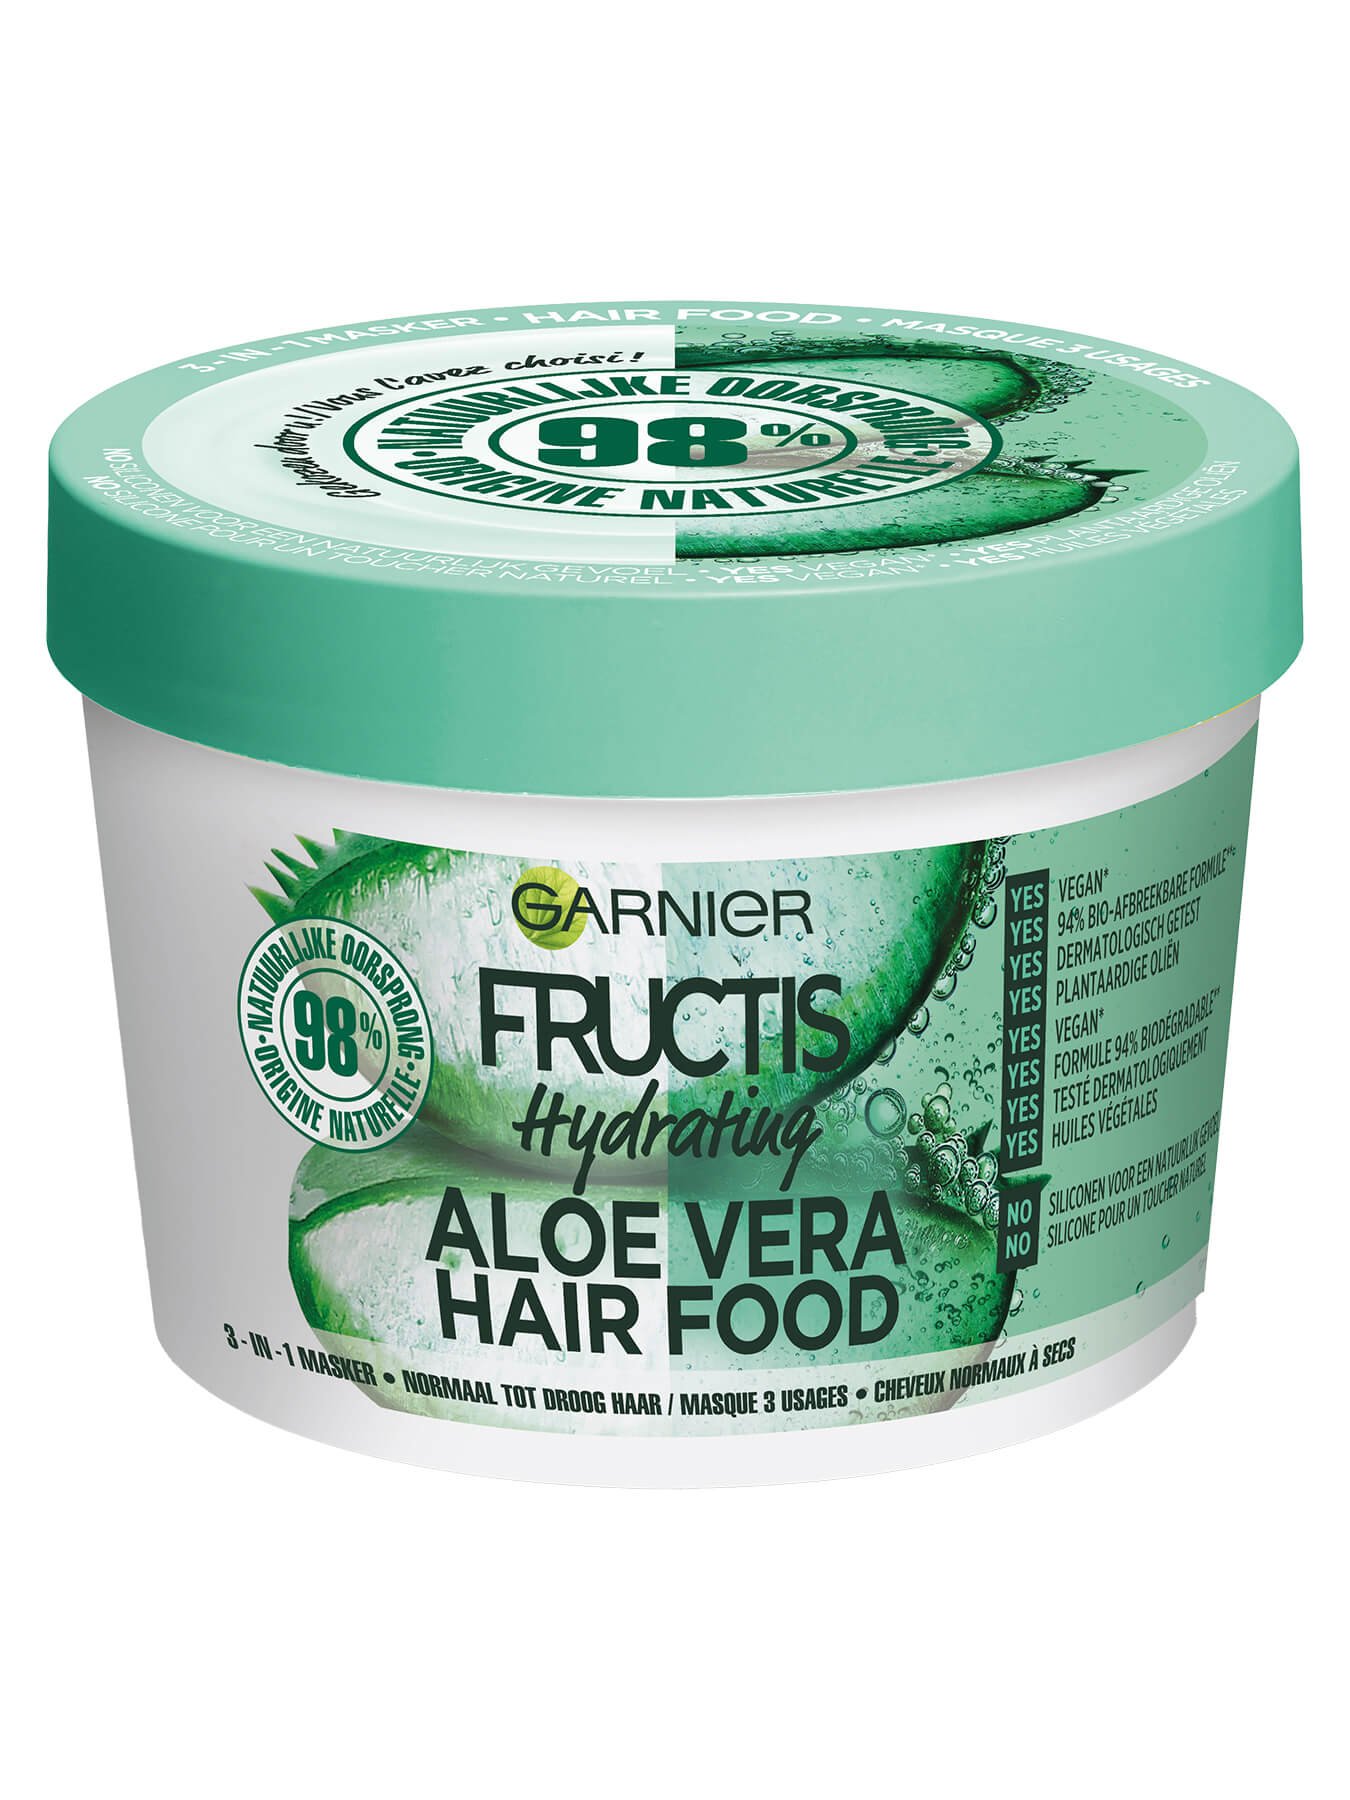 Fructis Hair Food   Aloe Vera   Mask 1350x1800px